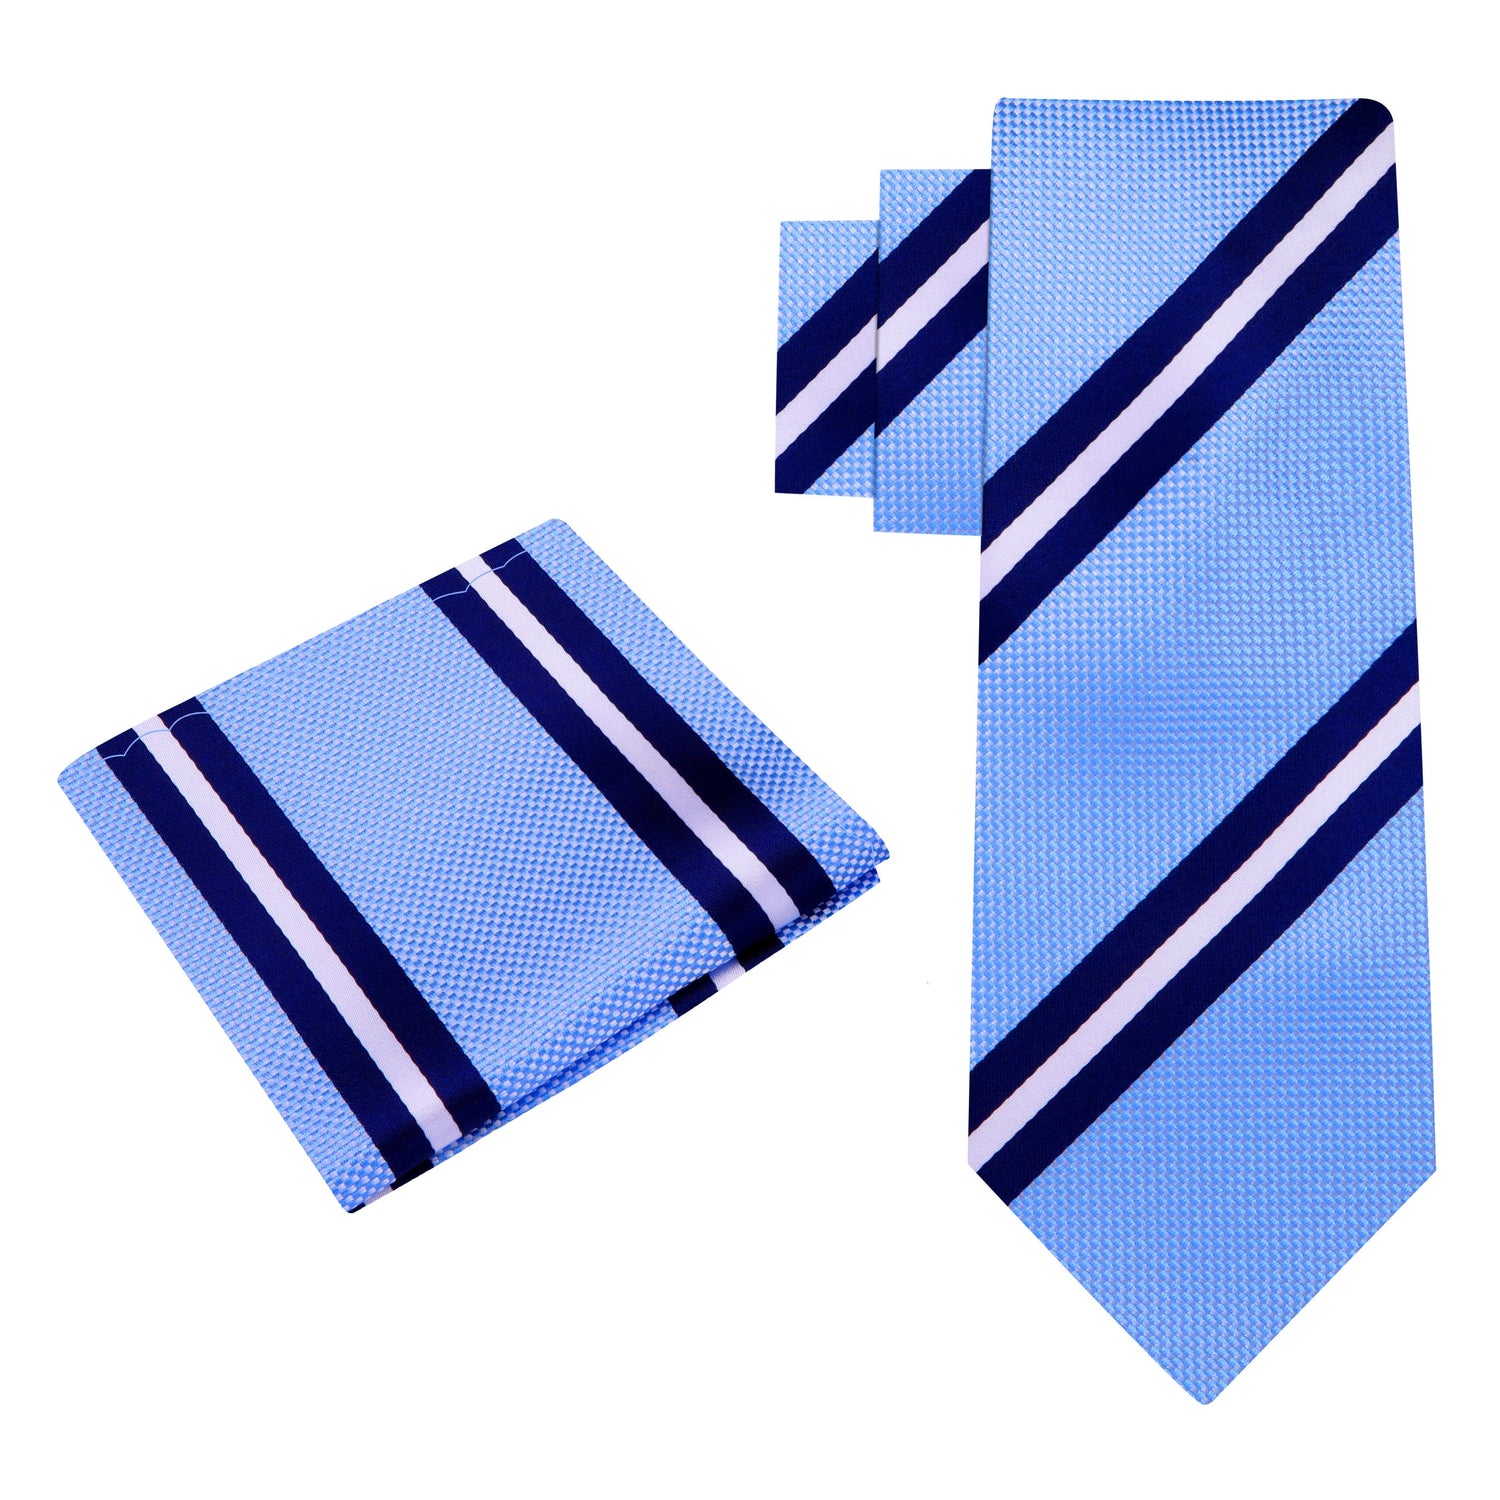 Alt View: Light Blue, Dark Blue and White Stripe Tie and Pocket Square